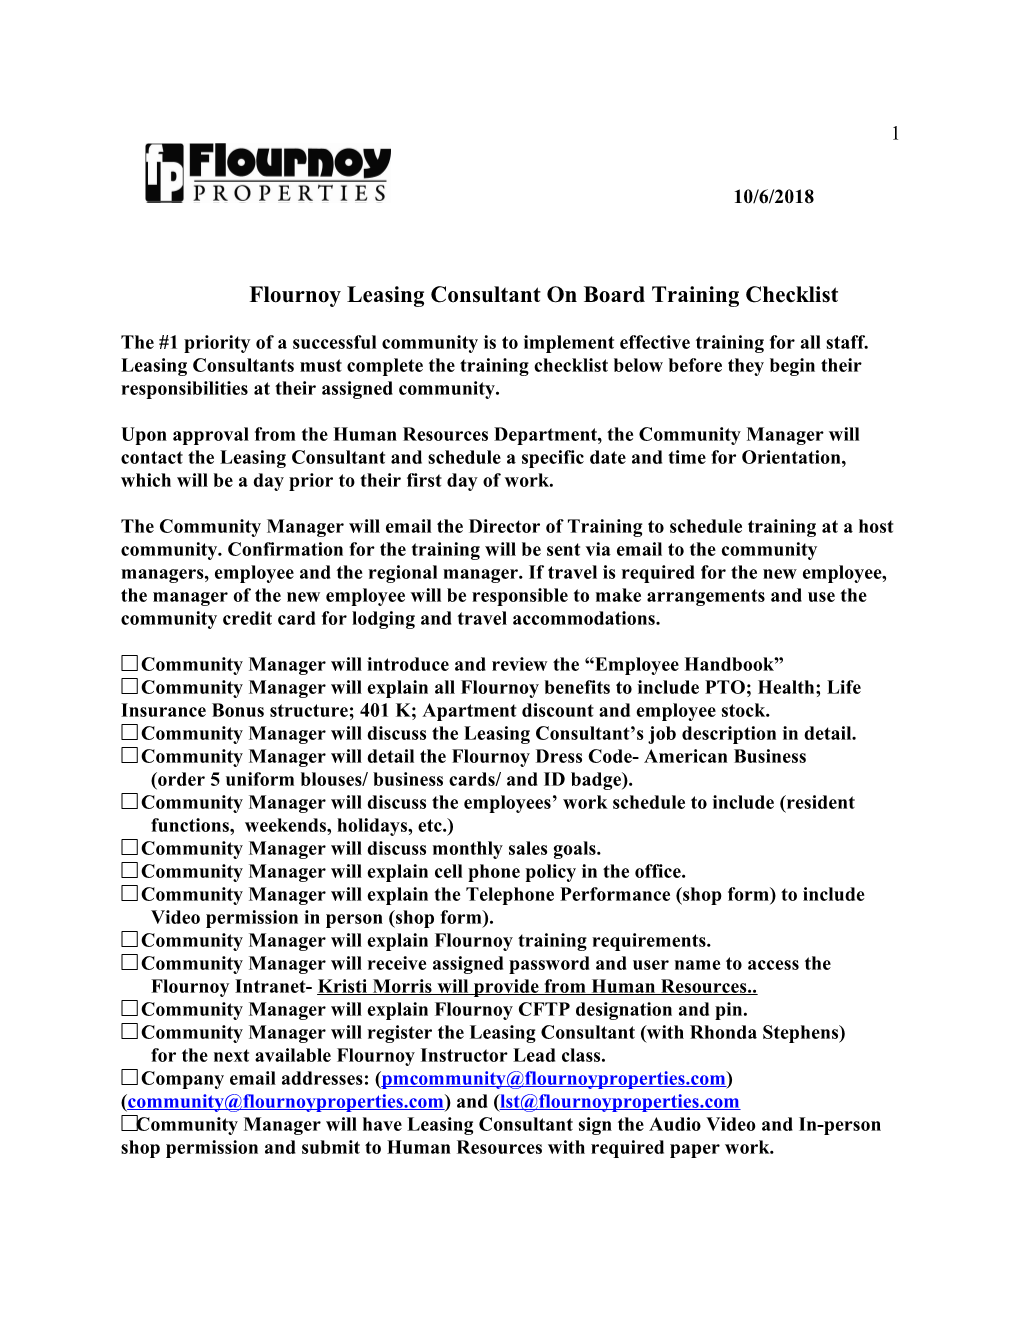 Flournoy Leasing Consultant on Board Training Checklist